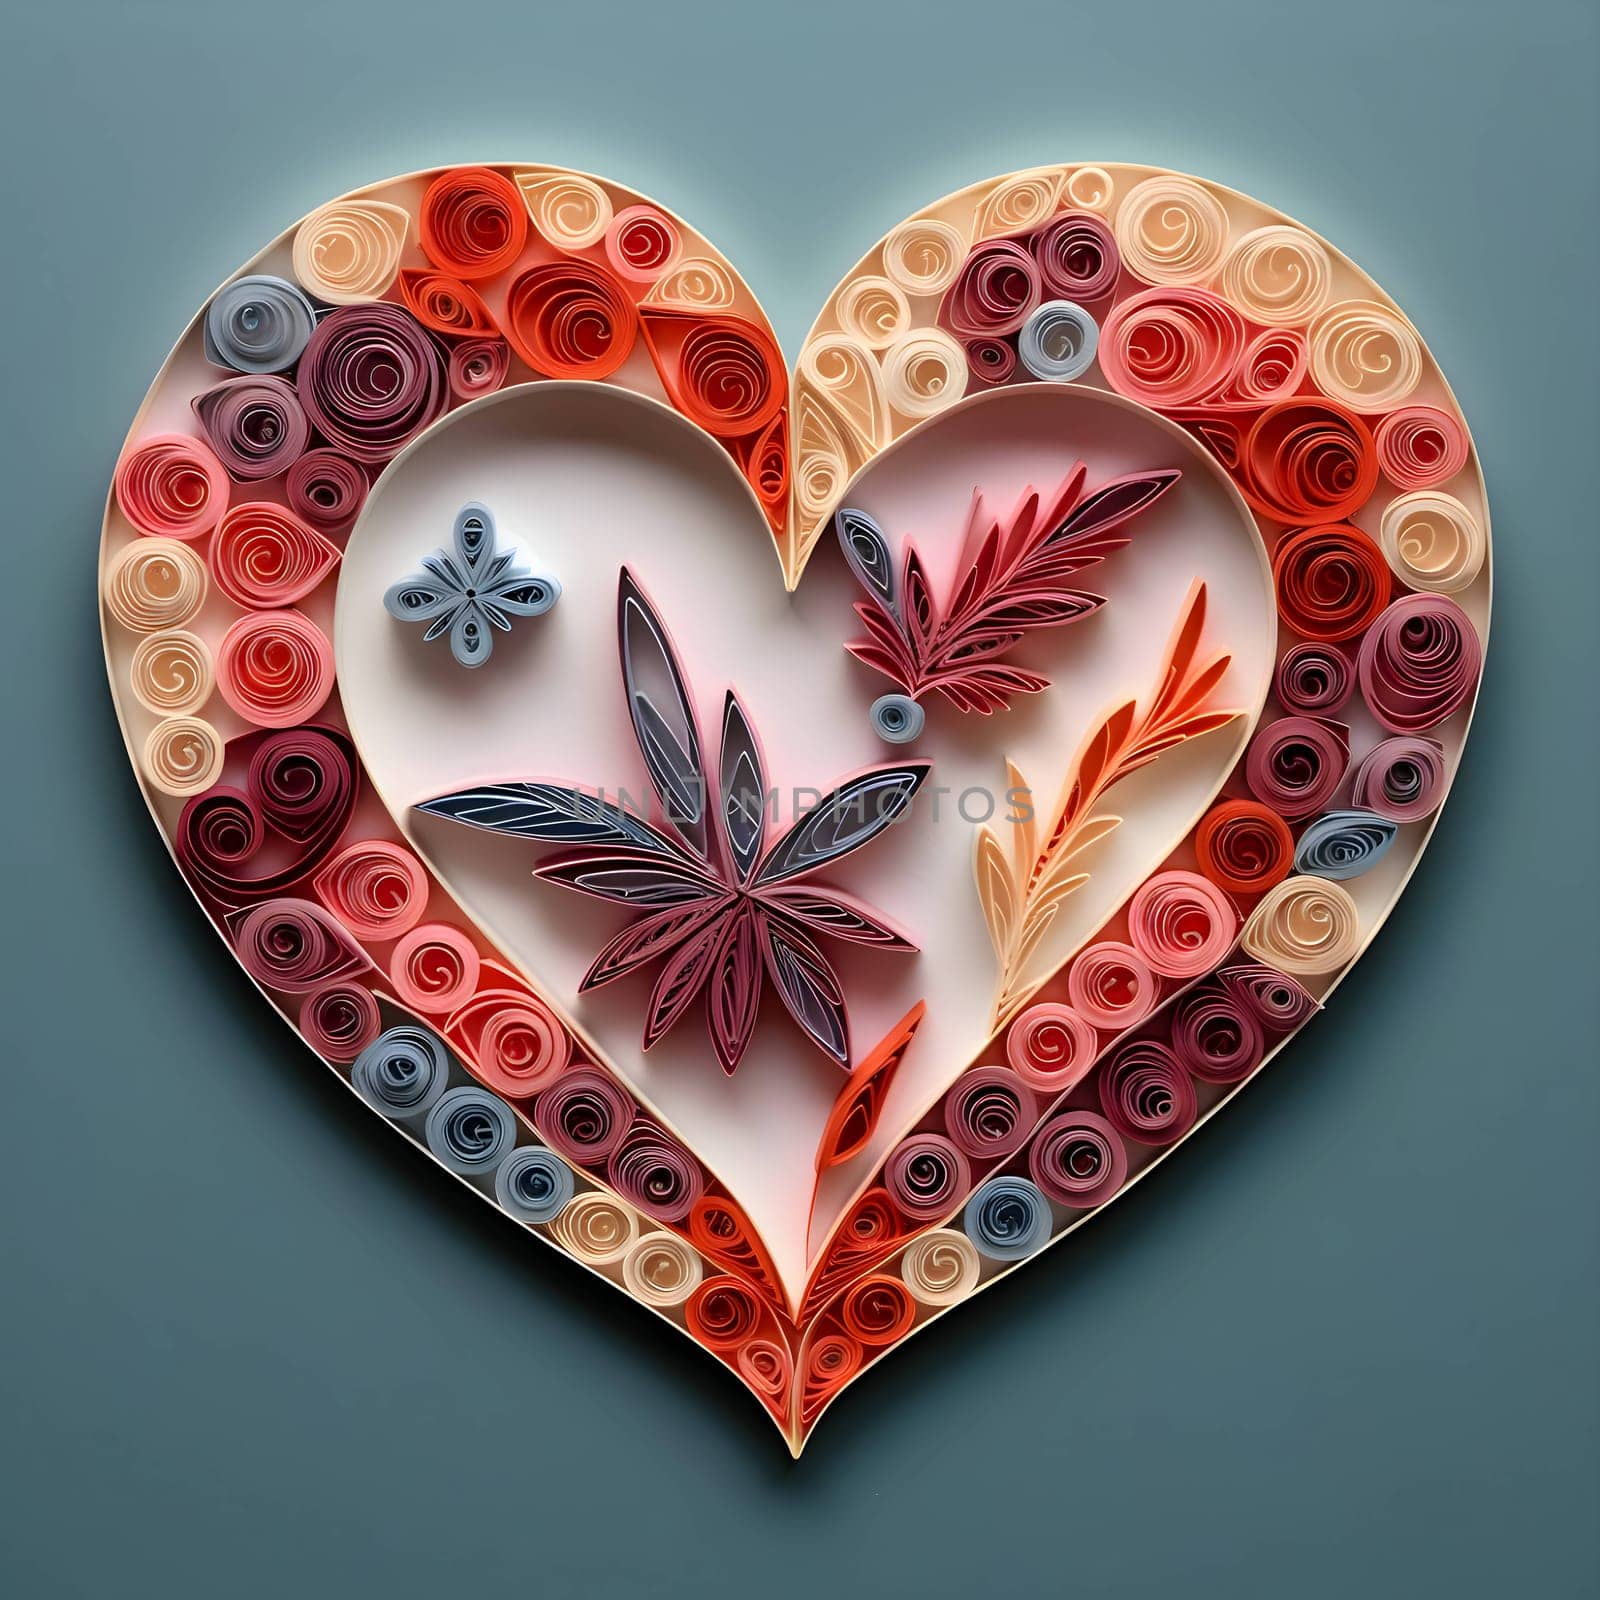 A heart-shaped arrangement of vibrant flowers.